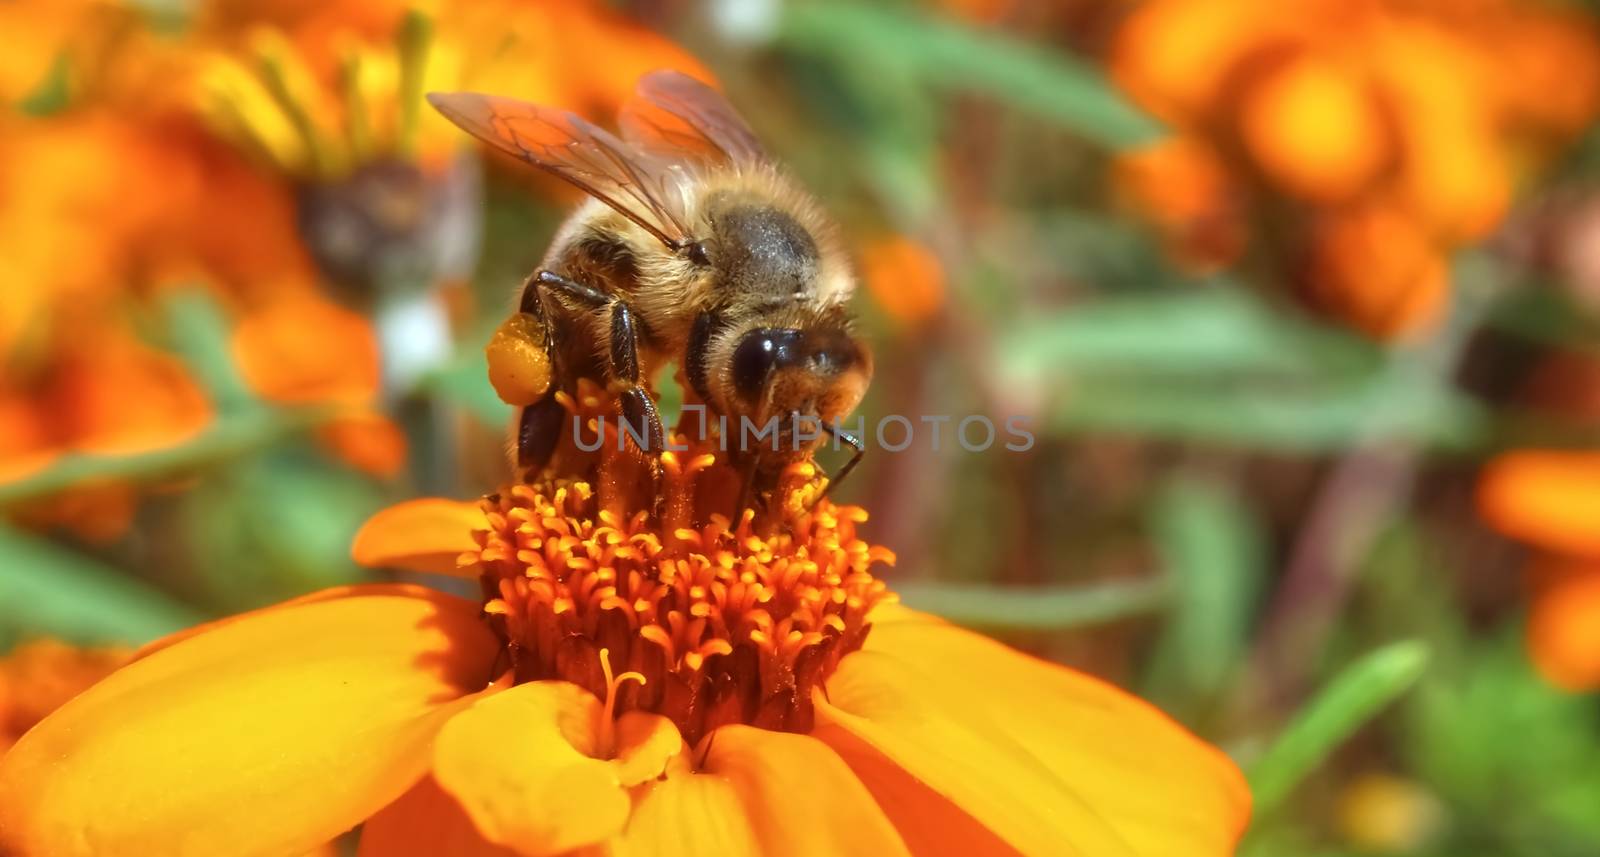 Beautiful macro of a honey bee, team worker on an orange zinnia flower